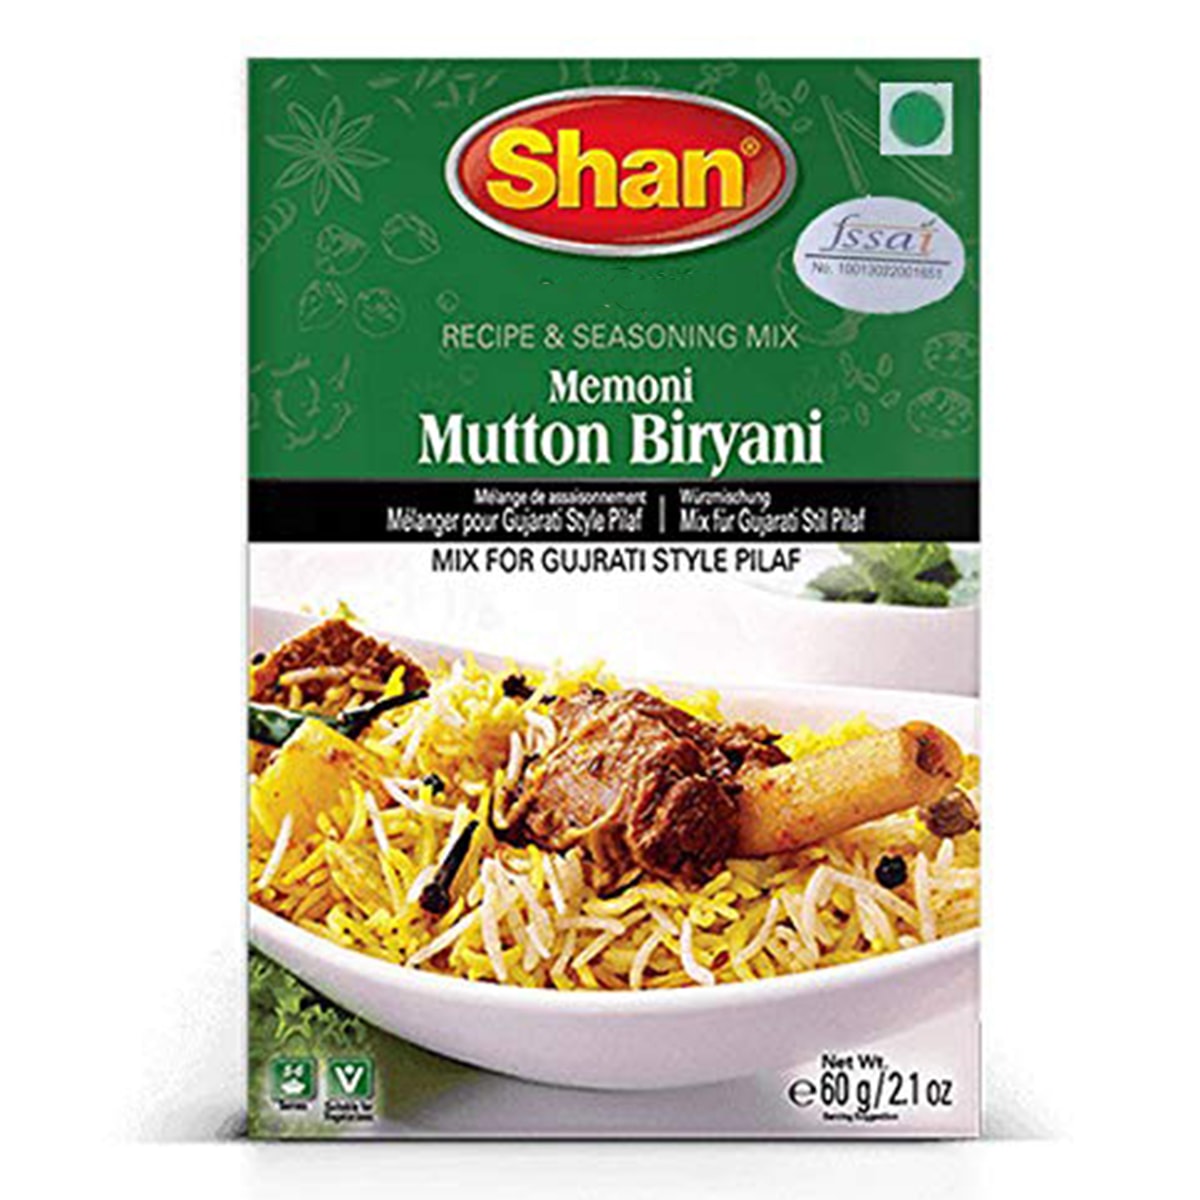 Buy Shan Memoni Mutton Biryani Mix - 60 gm